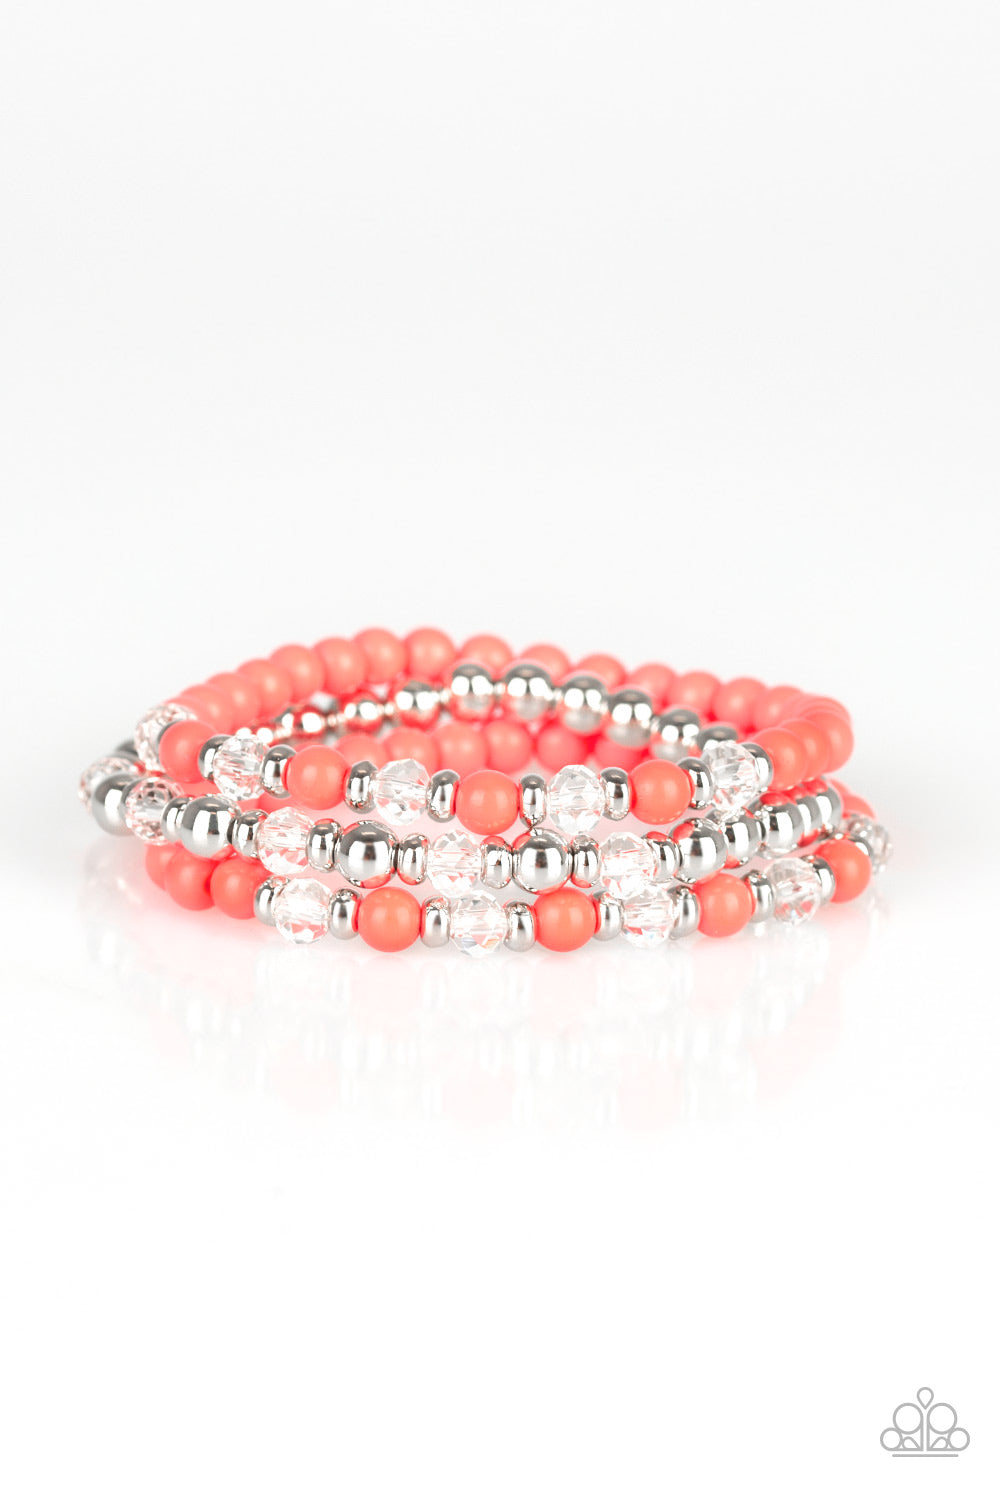 Irresistibly Irresistible Orange Paparazzi Bracelets Cashmere Pink Jewels - Cashmere Pink Jewels & Accessories, Cashmere Pink Jewels & Accessories - Paparazzi